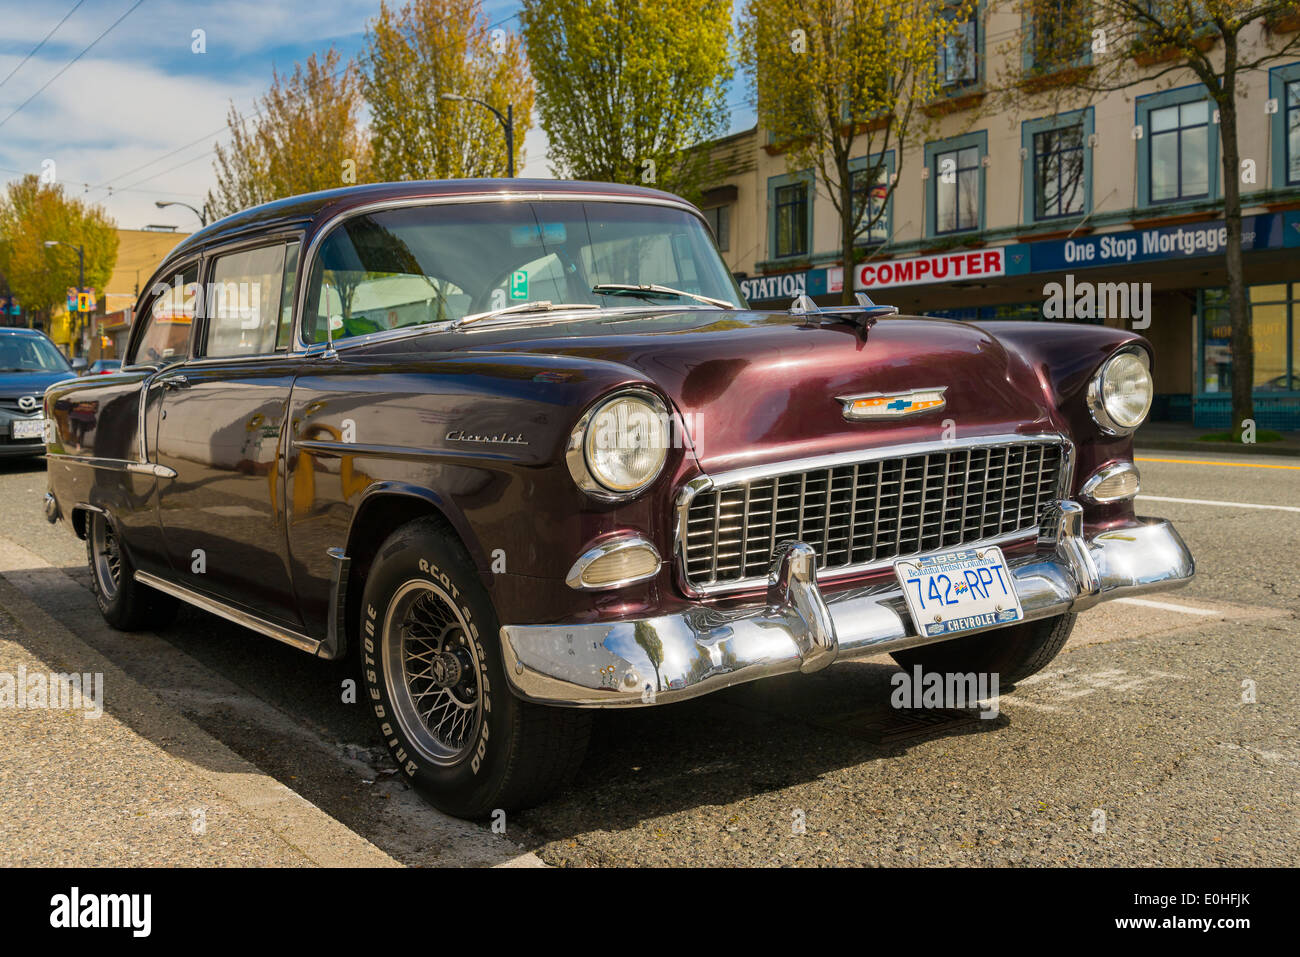 1955 vintage Chevrolet car. Stock Photo